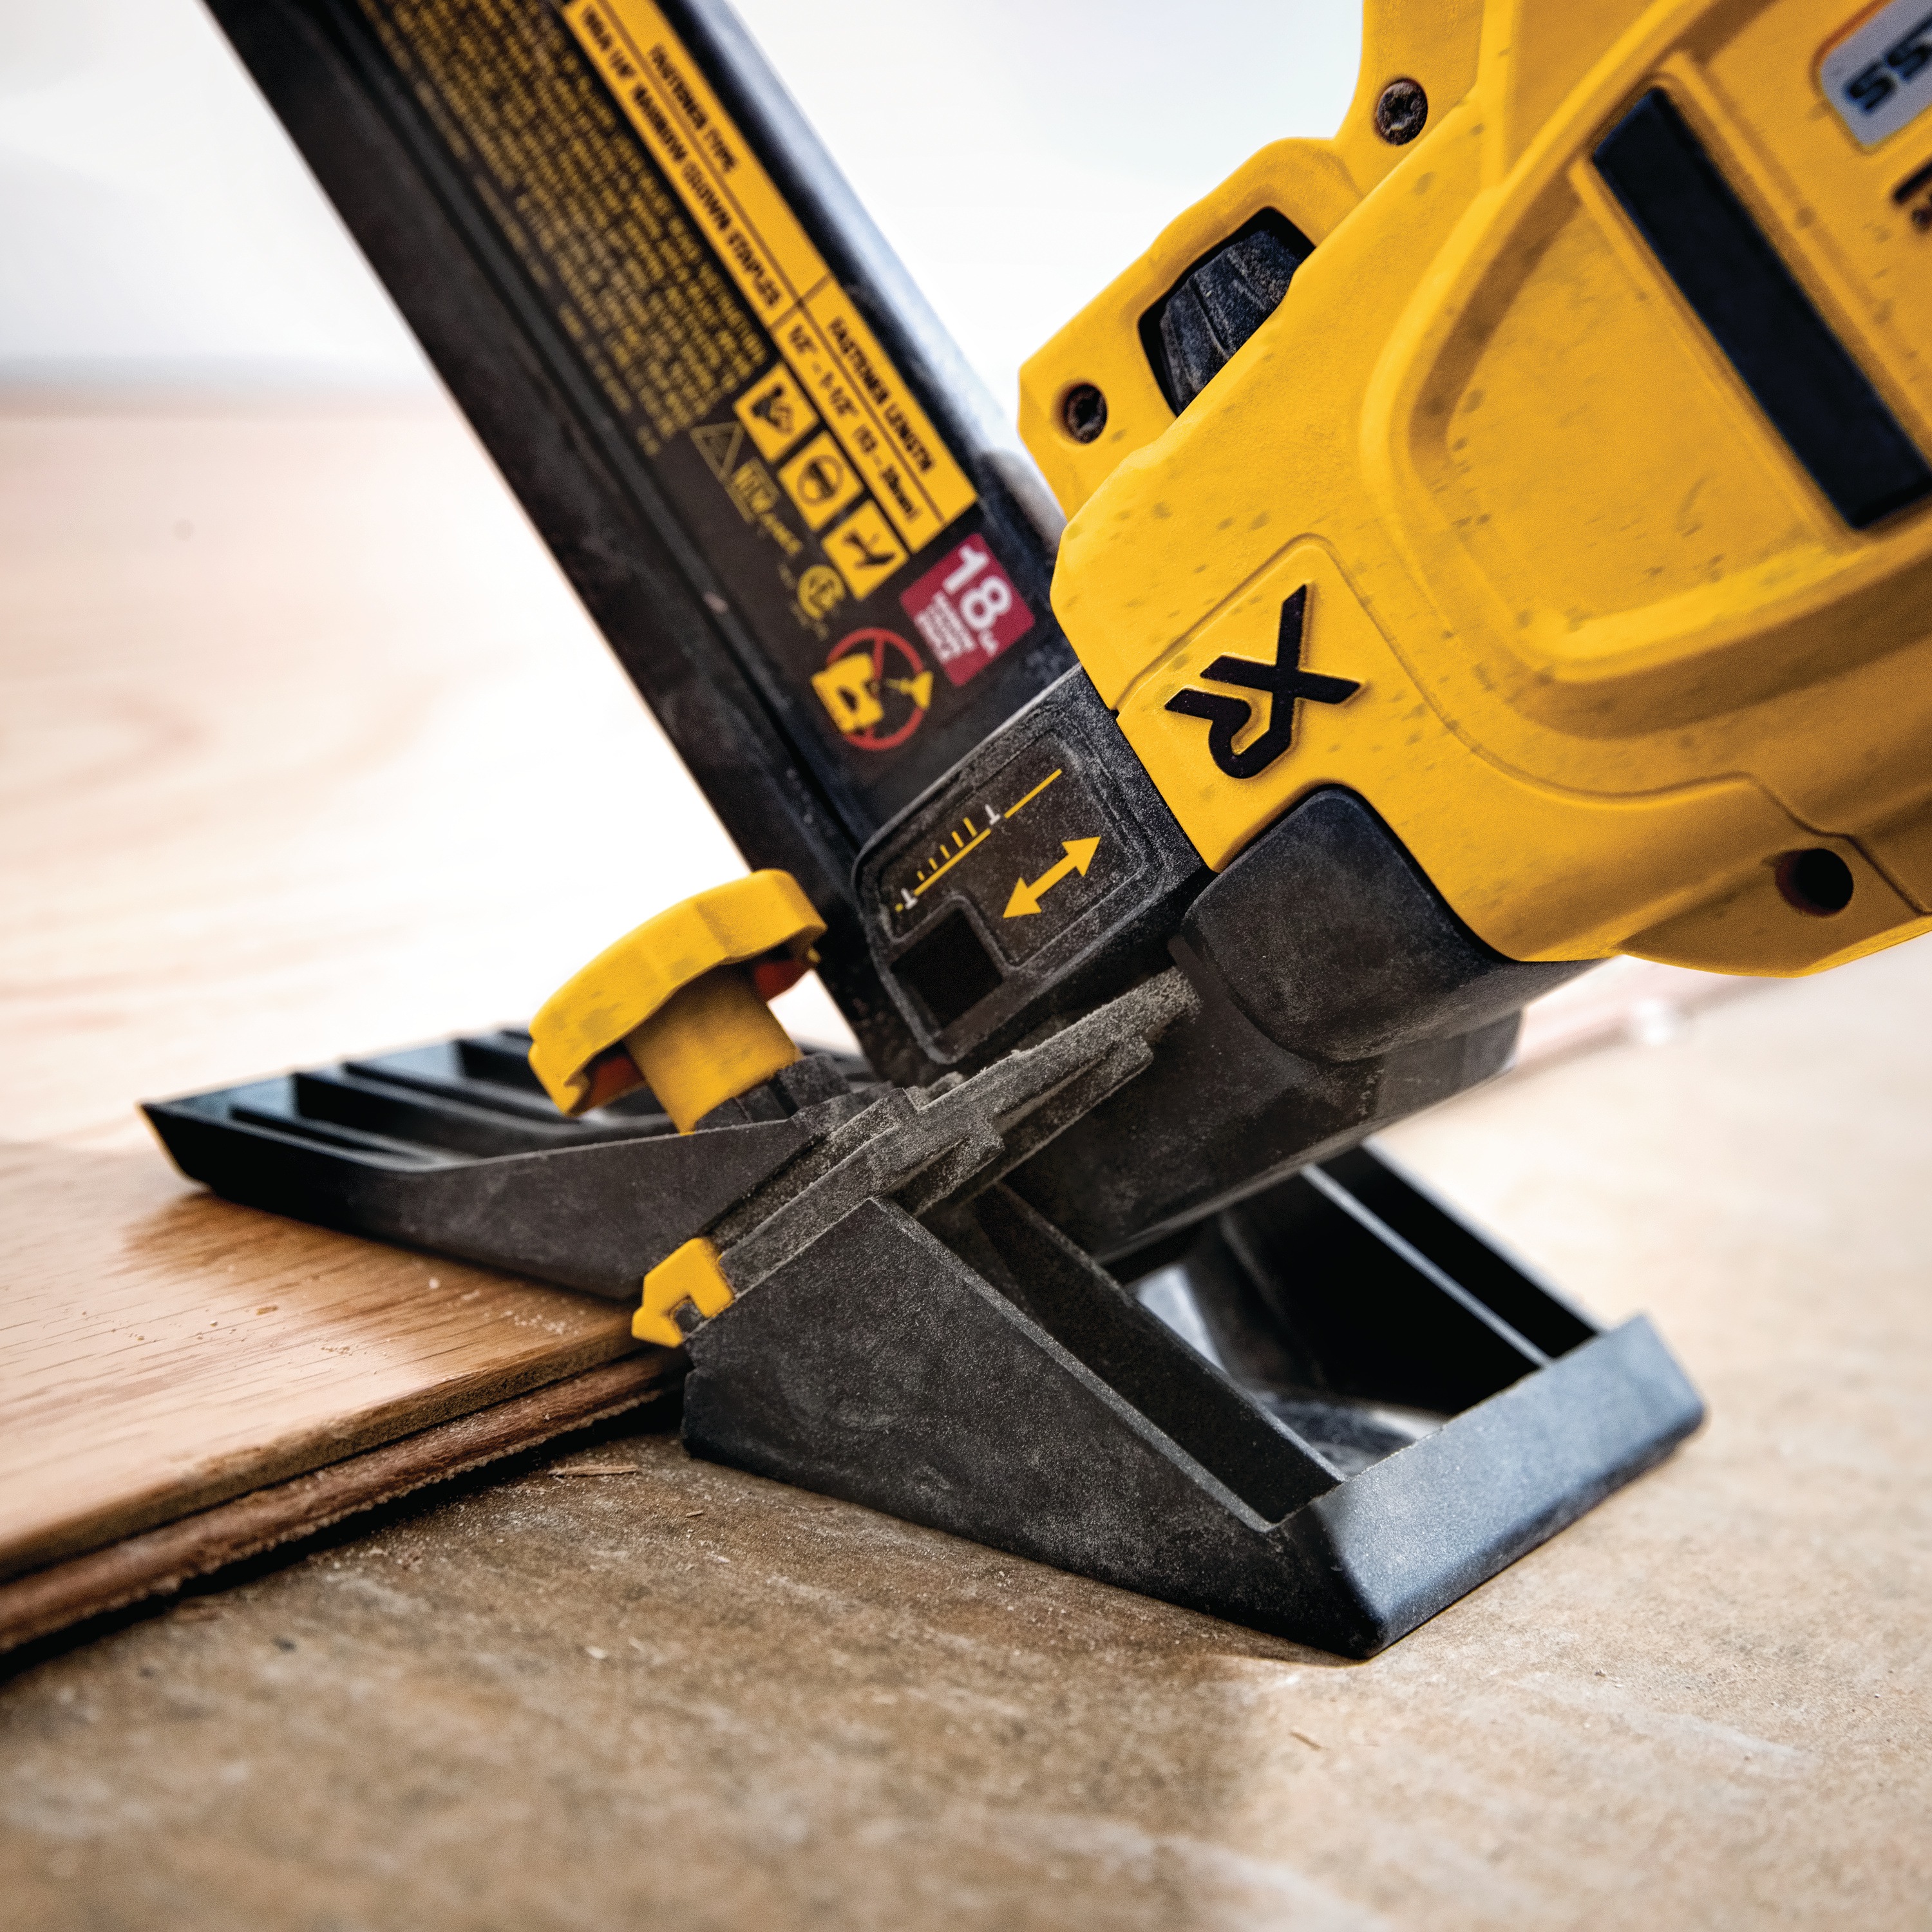 18 Ga Cordless Flooring Stapler Tool, Cordless Hardwood Floor Nailer